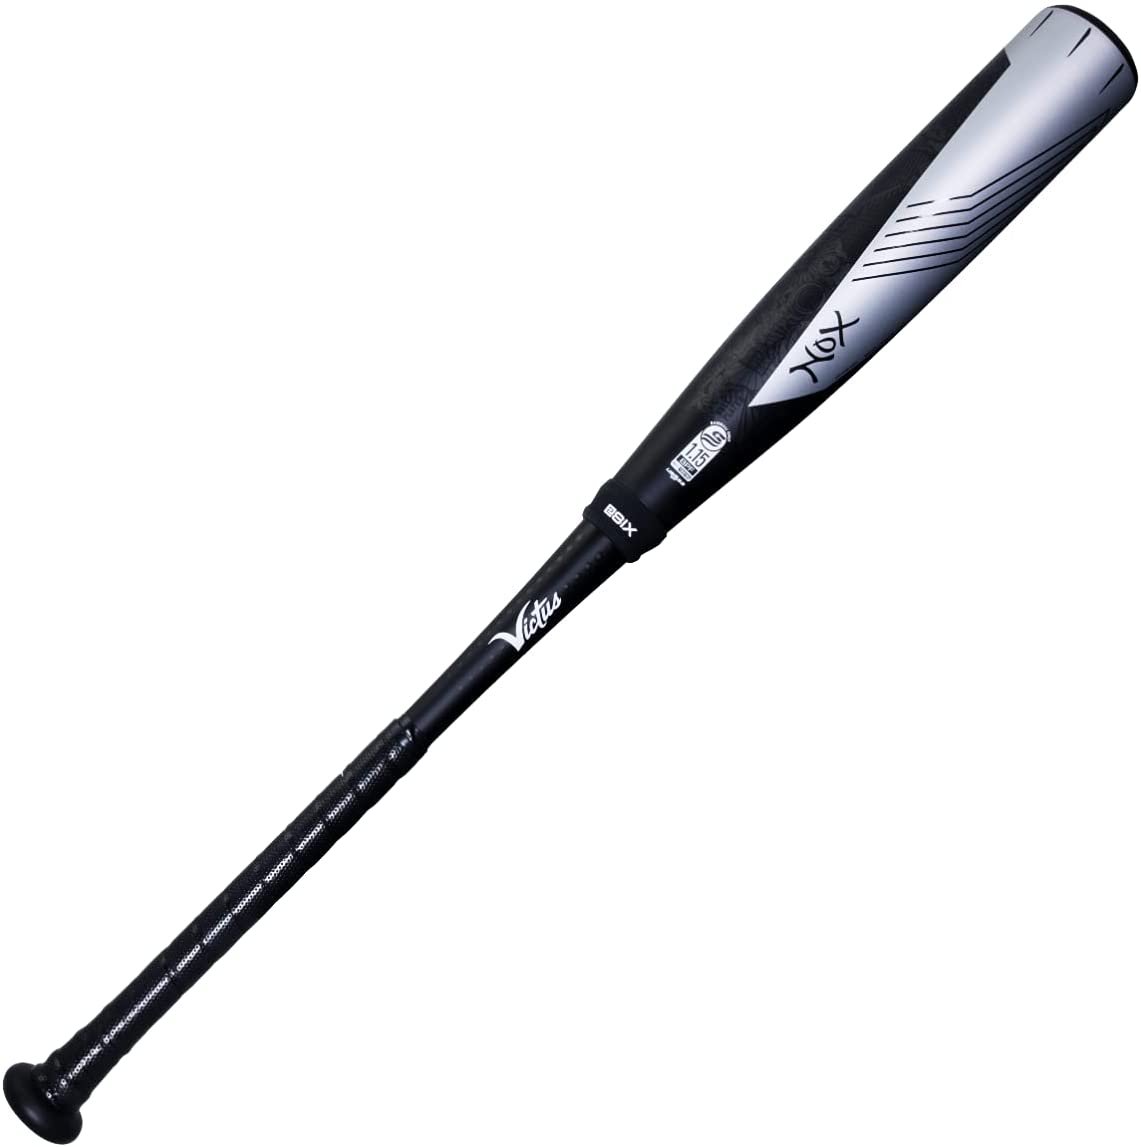 victus-sports-nox-10-baseball-bat-29-inch-19-oz VSBNX10-2919 Victus  <ul class=a-unordered-list a-vertical a-spacing-mini> <li><span class=a-list-item>Two-piece hybrid design built with a